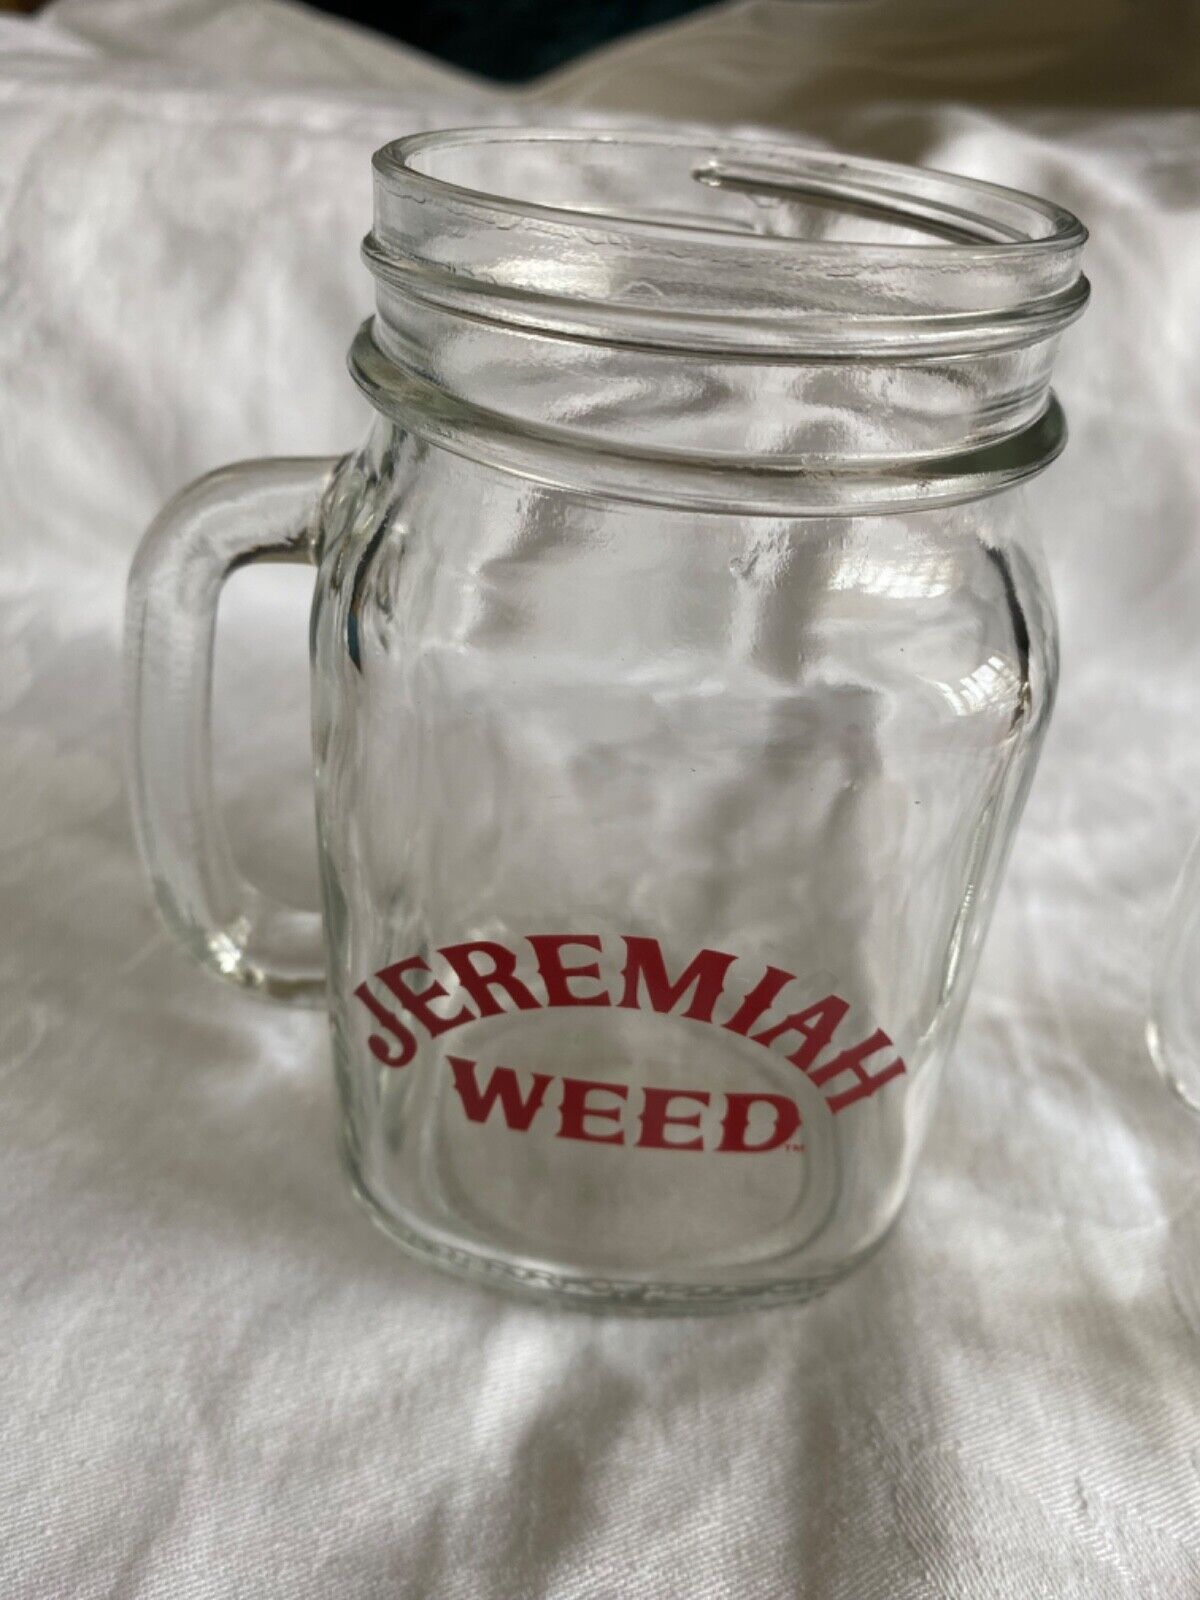 Brand New Jeremiah Weed Bourbon Whiskey 16oz Jam Jar Glasses with Handles